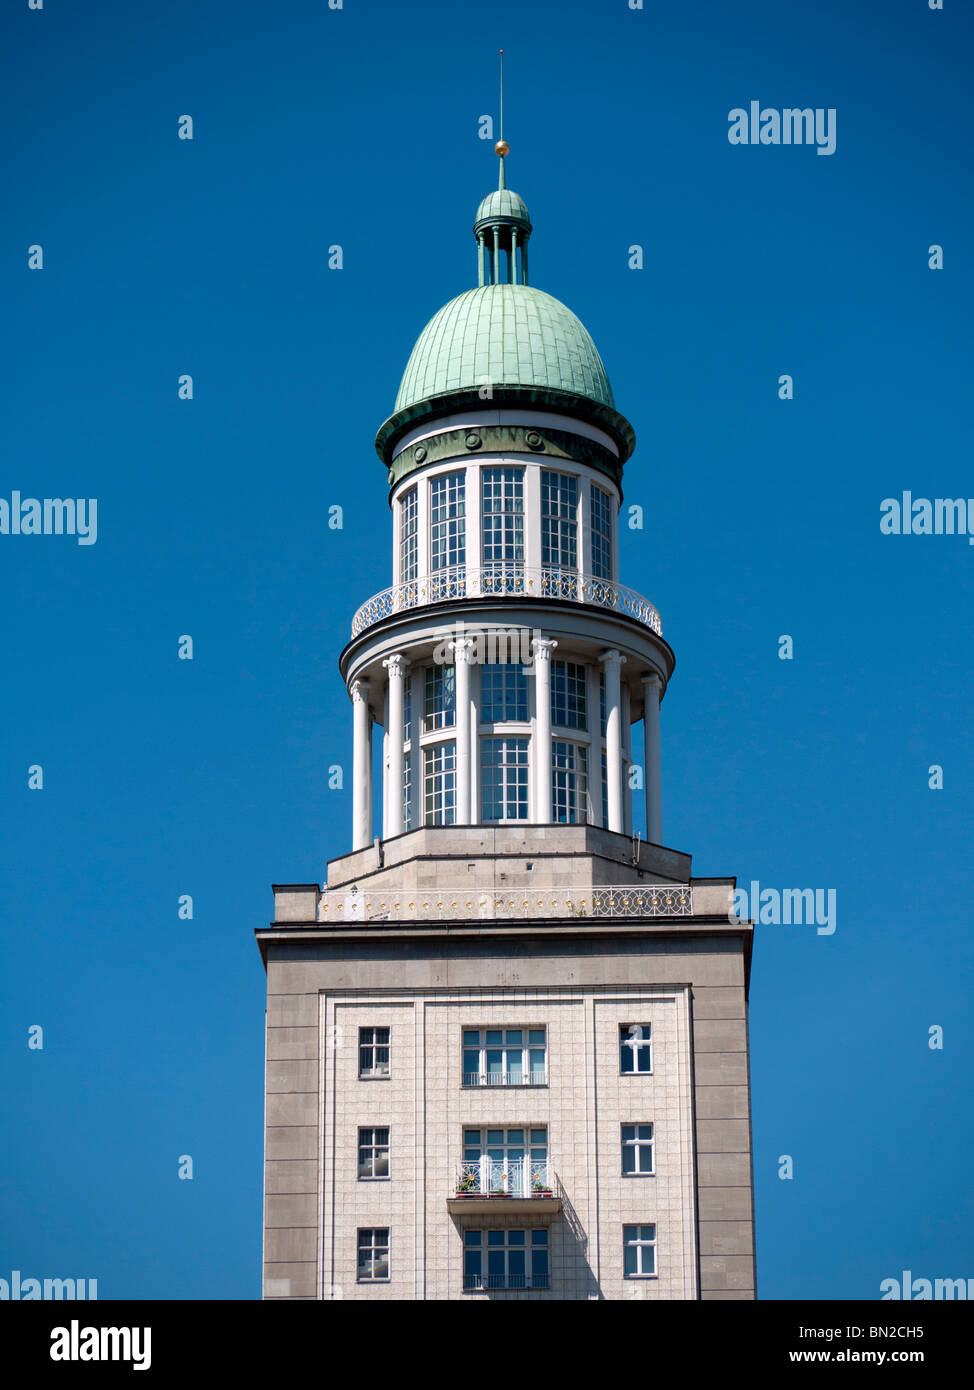 View of famous landmark tower at Frankfurter Tor on Karl Marx Allee in former east Berlin in Germany Stock Photo